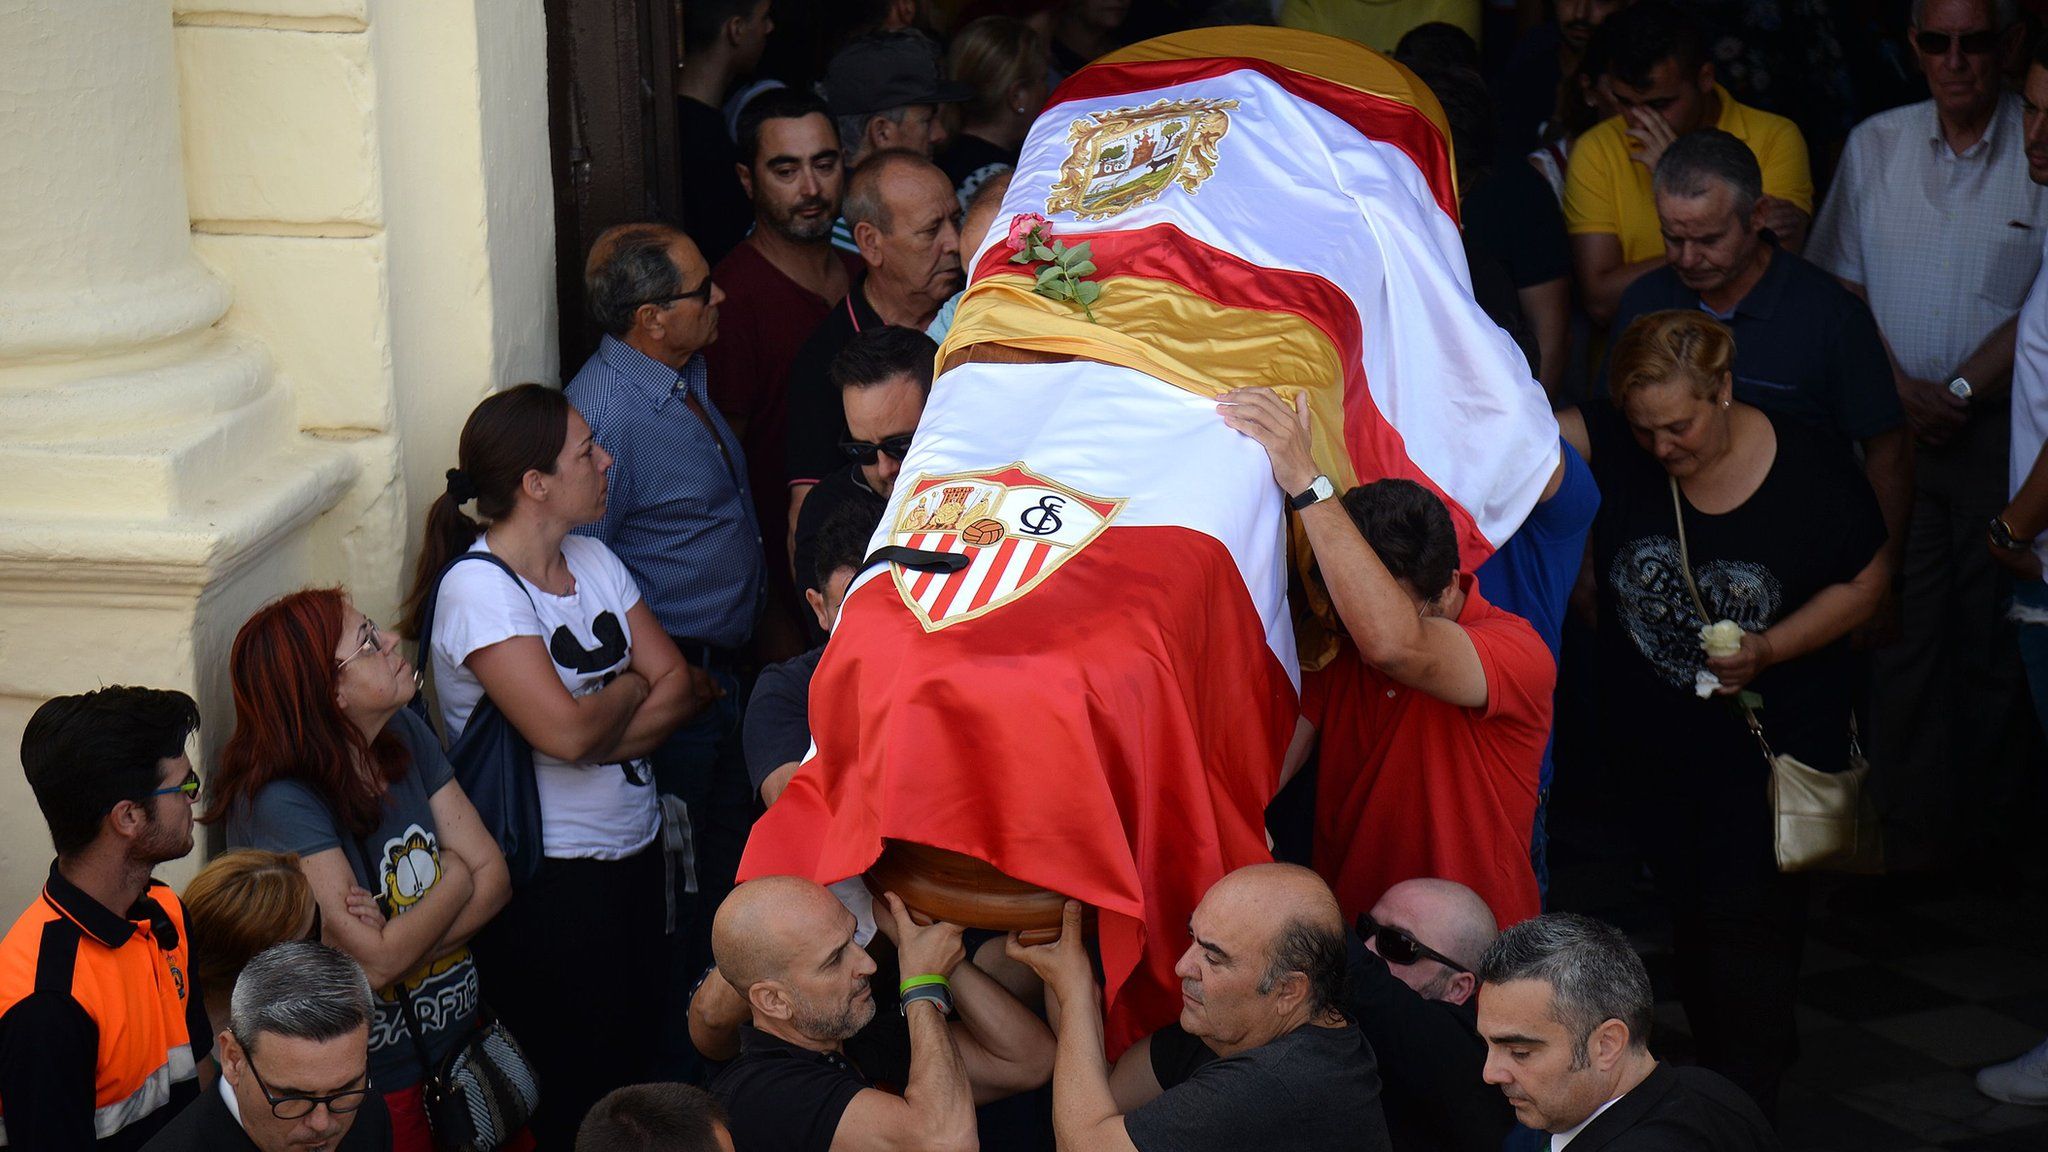 Jose Antonio Reyes: Footballer's high-speed crash prompts anger